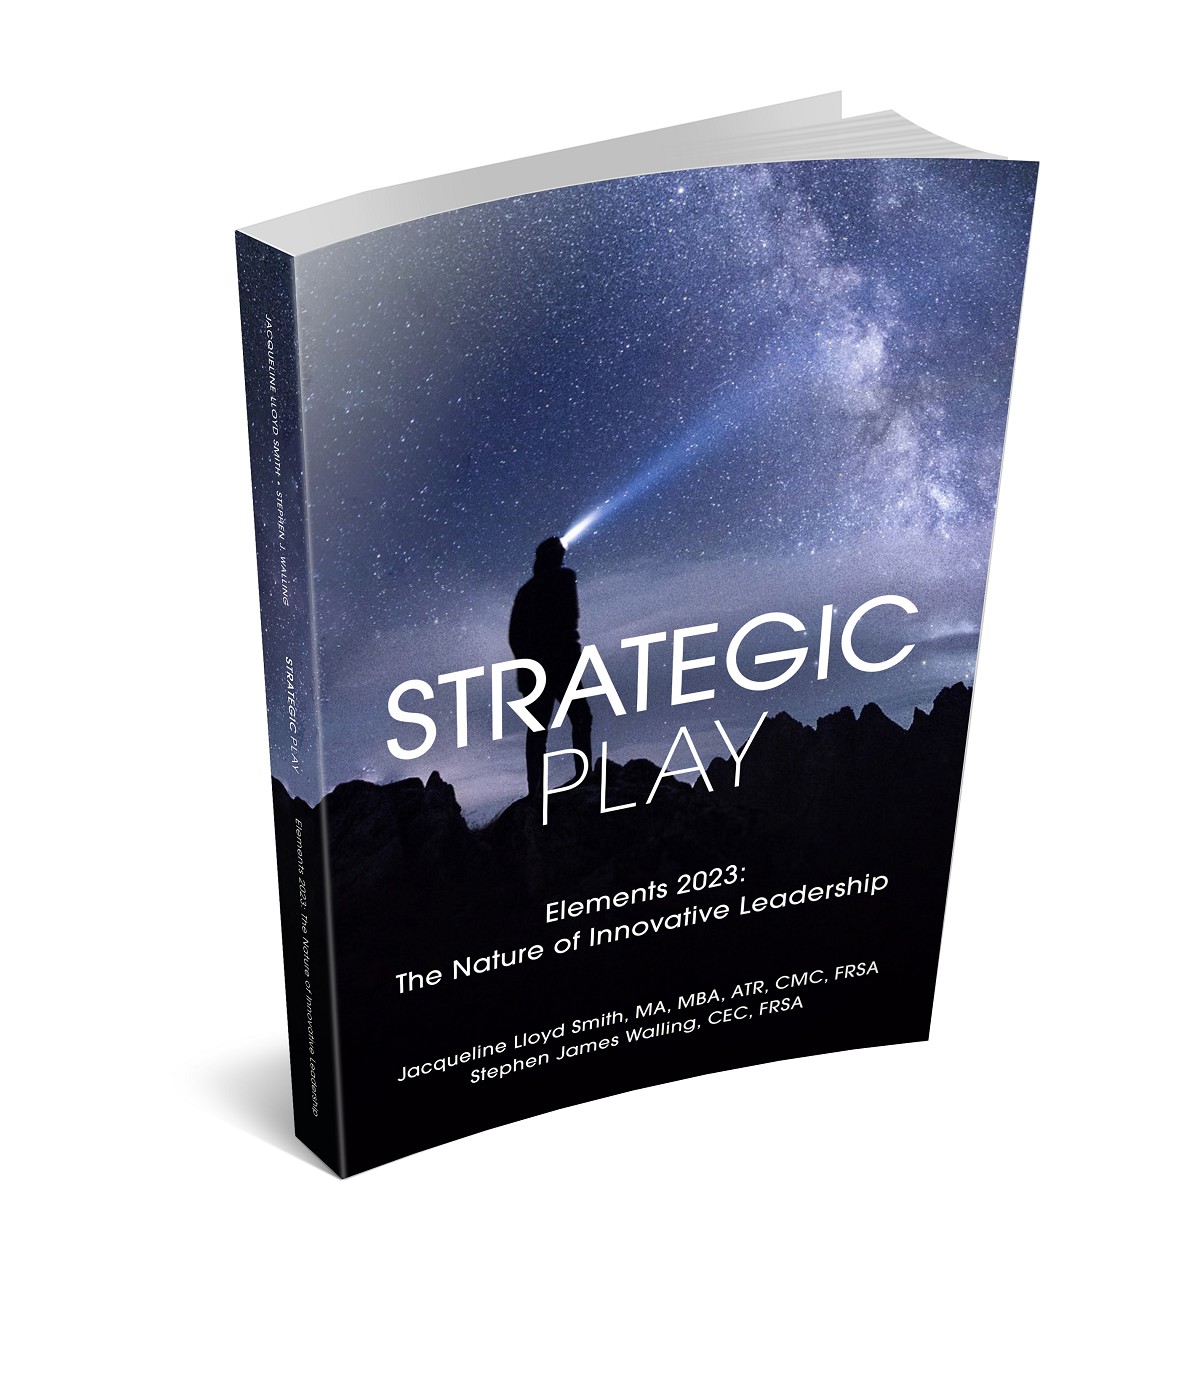 wzw-strategic-play-elements